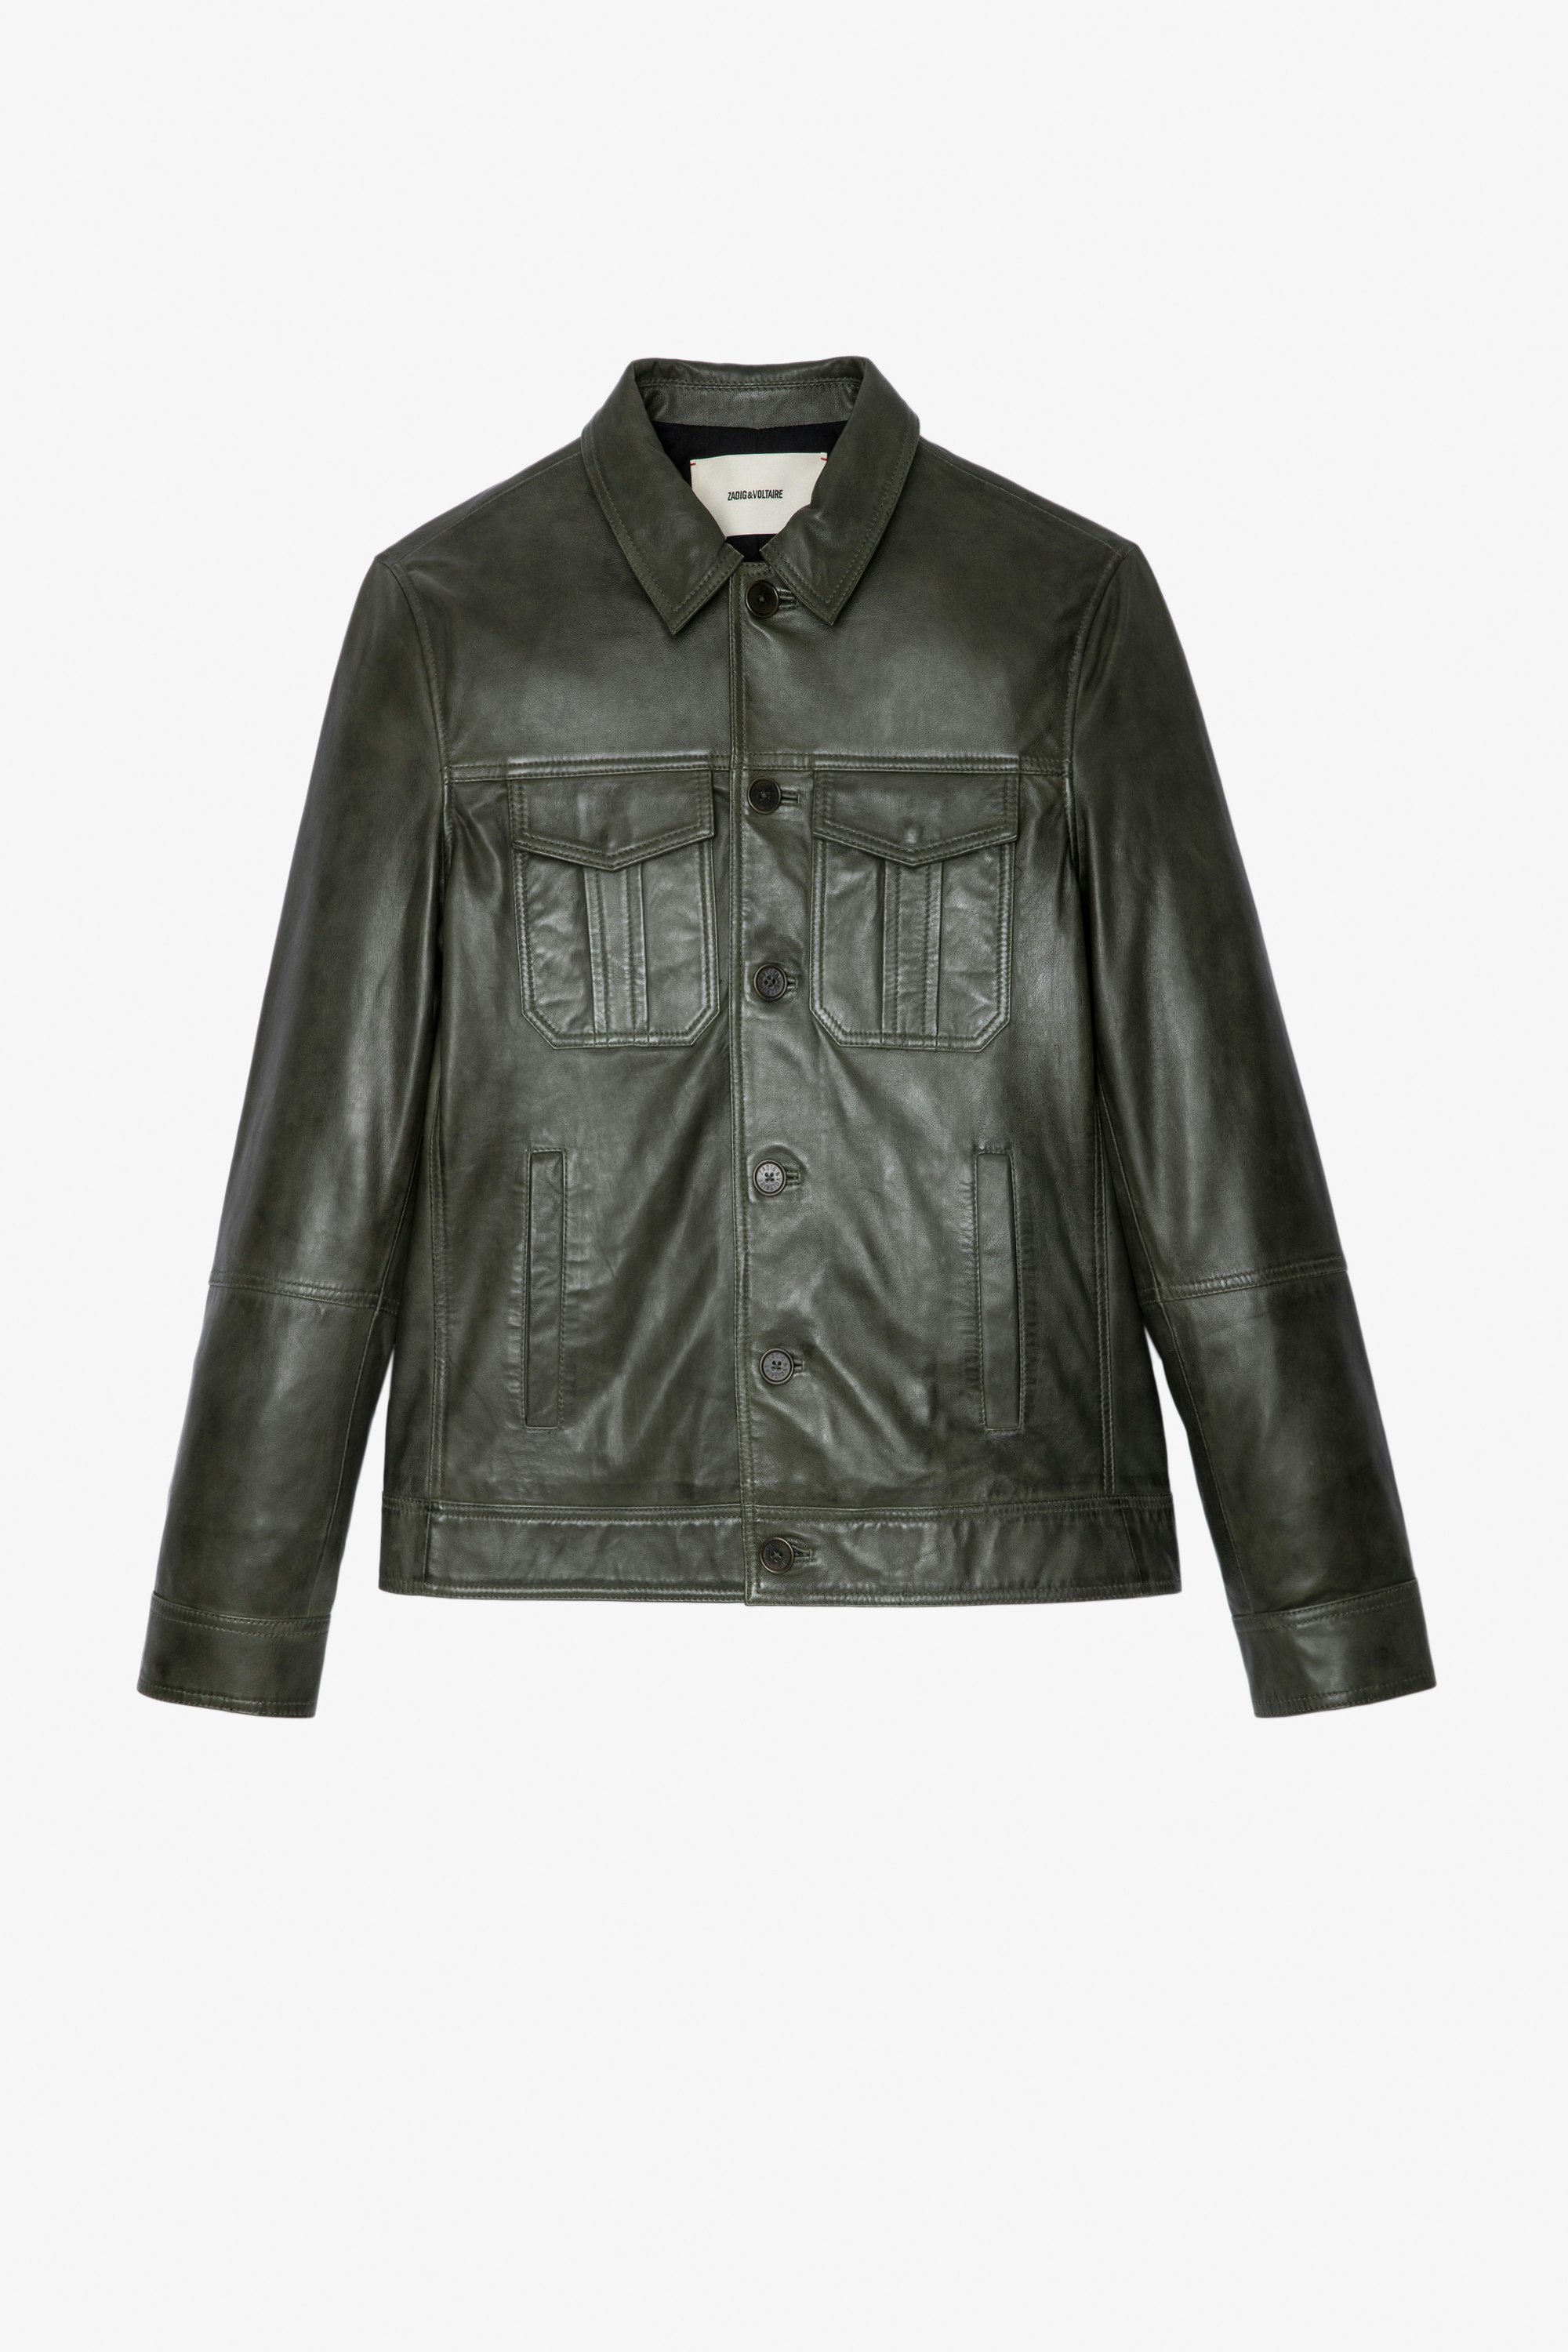 Lasso Leather Jacket Men's jacket in green leather